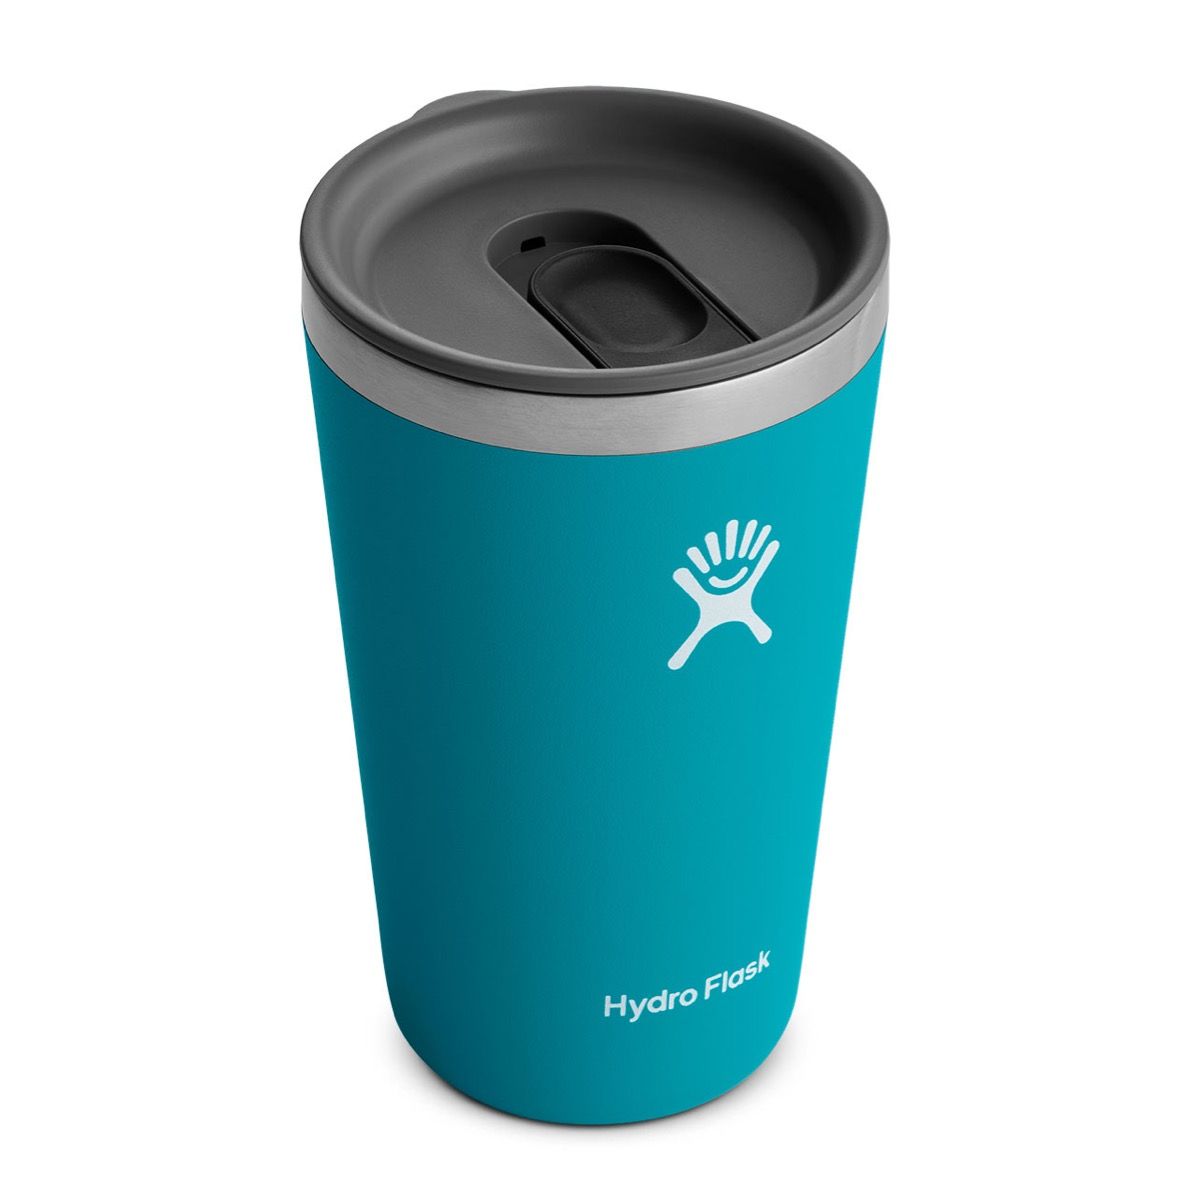 Hydro Flask 24 oz Mug SNAPPER Double Wall Vacuum Insulated Coffee